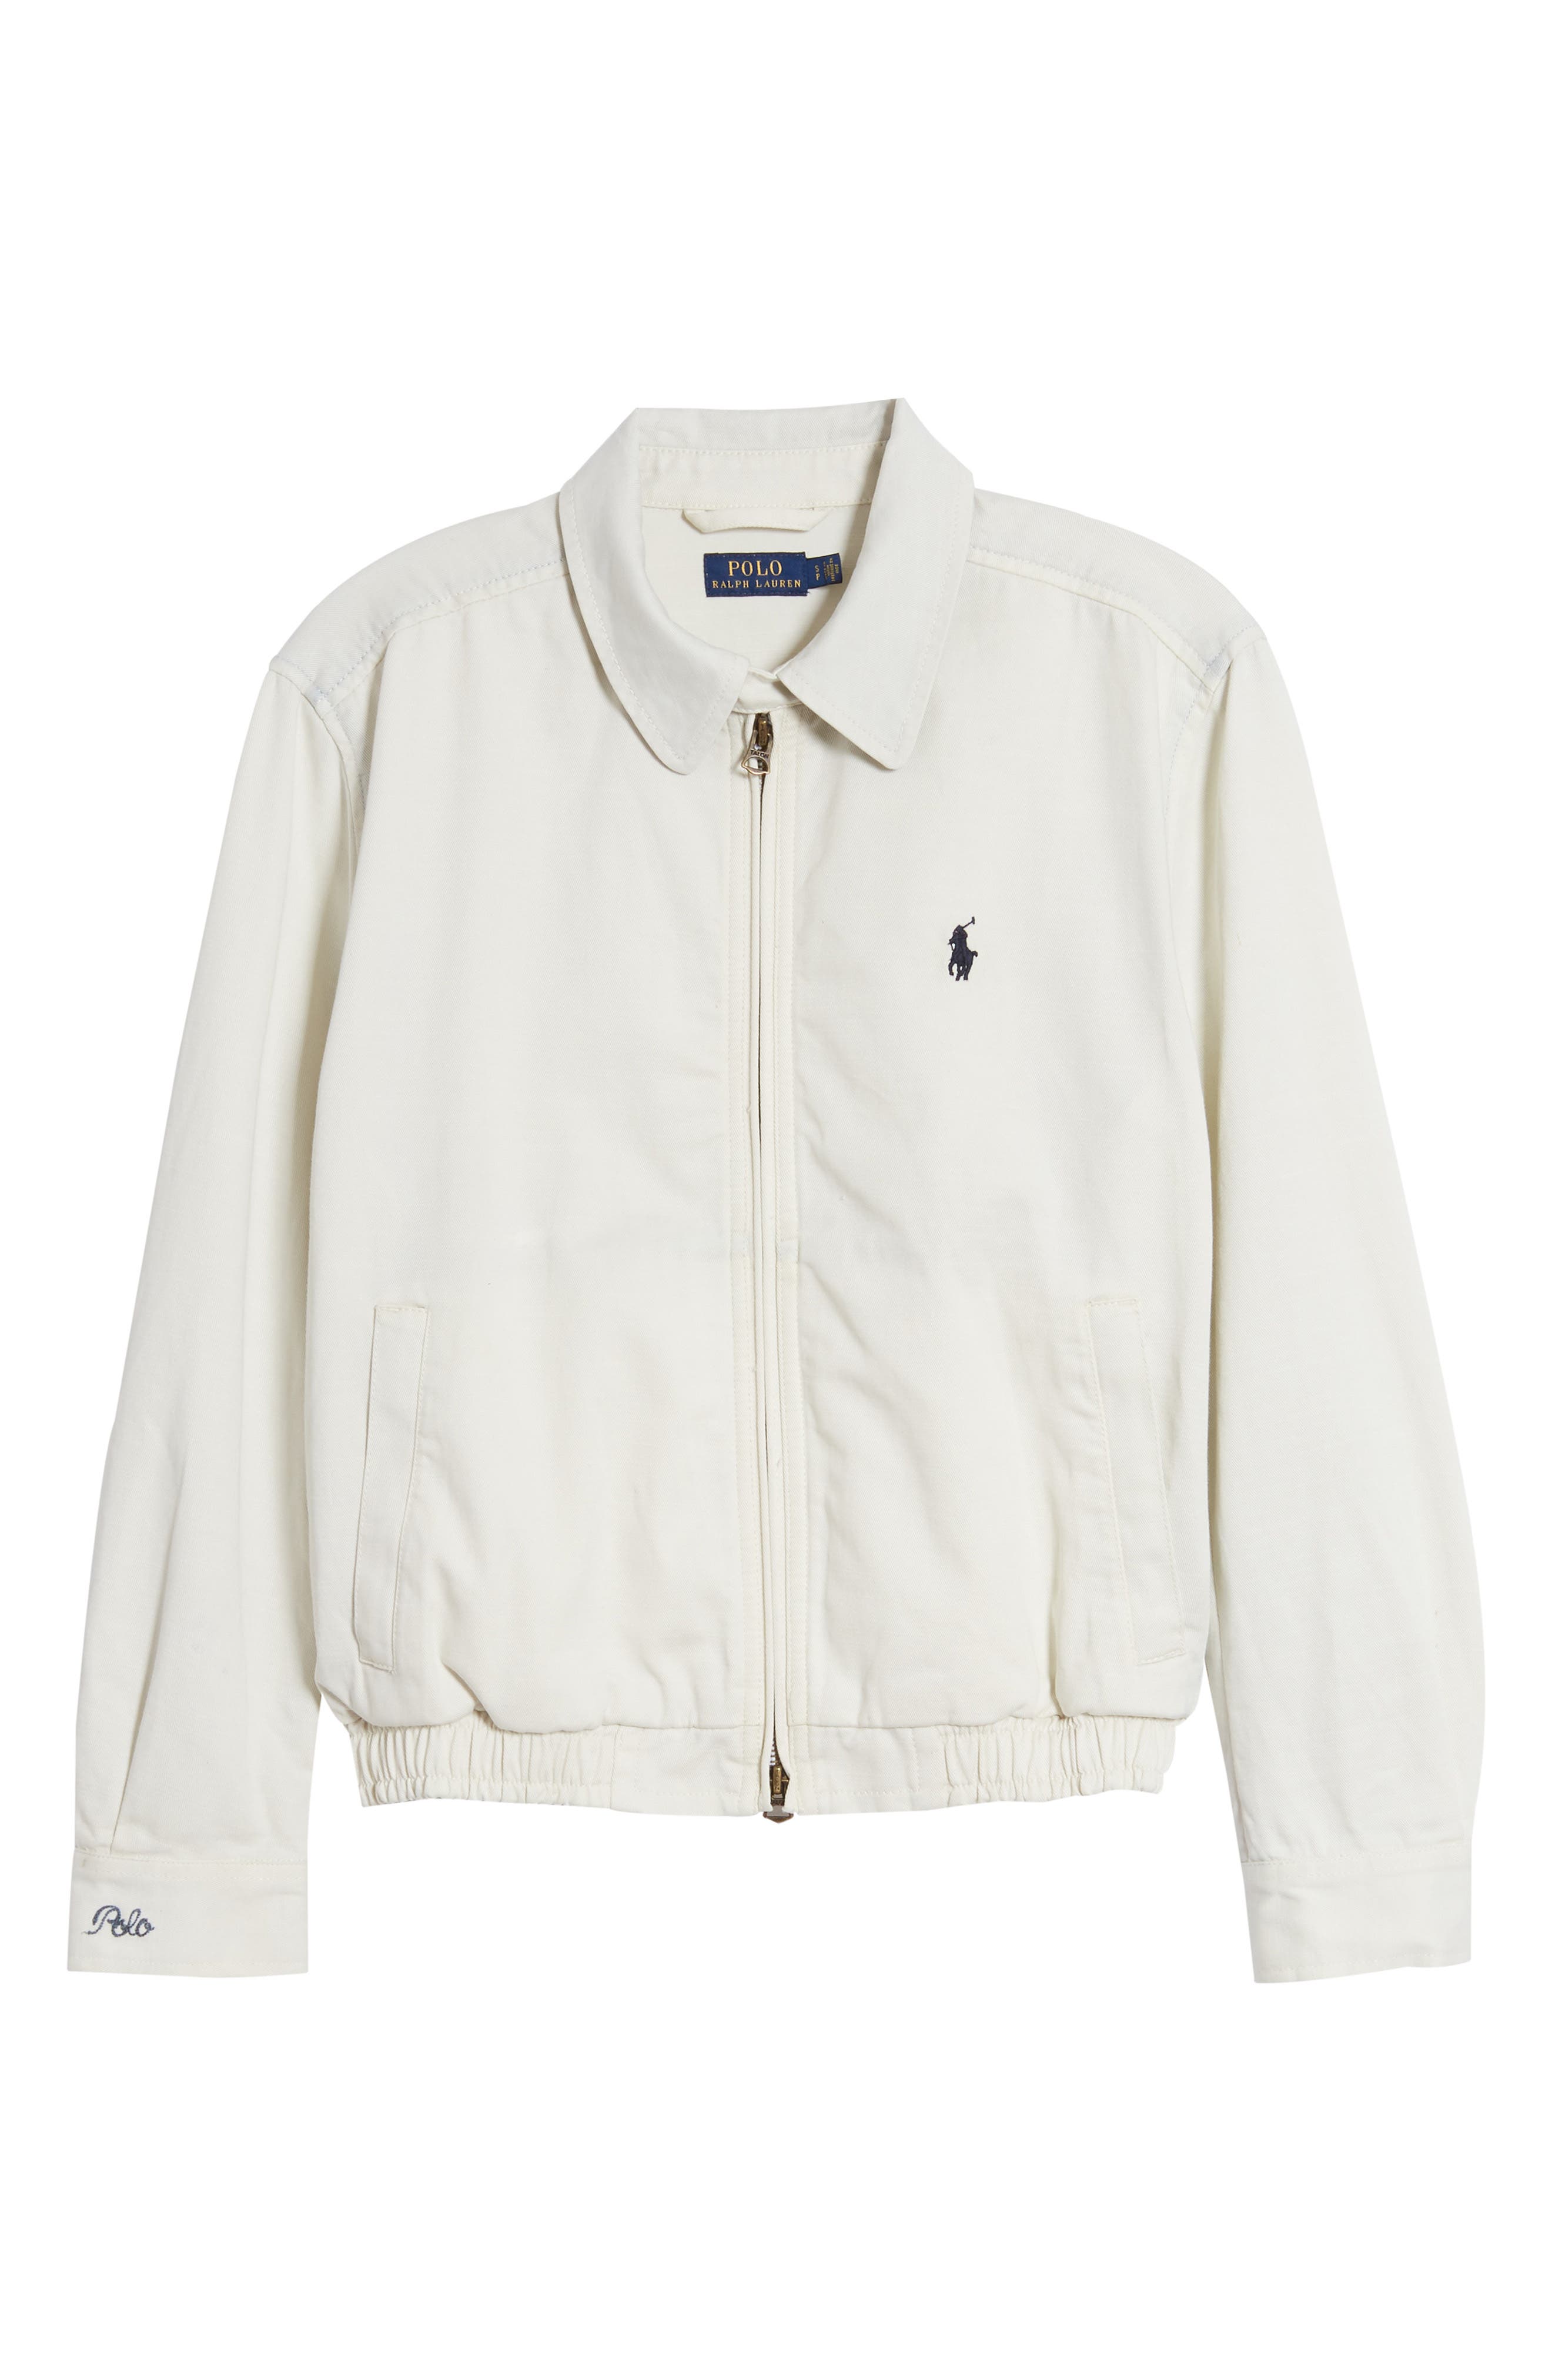 Polo Ralph Lauren Windbreaker Jacket 